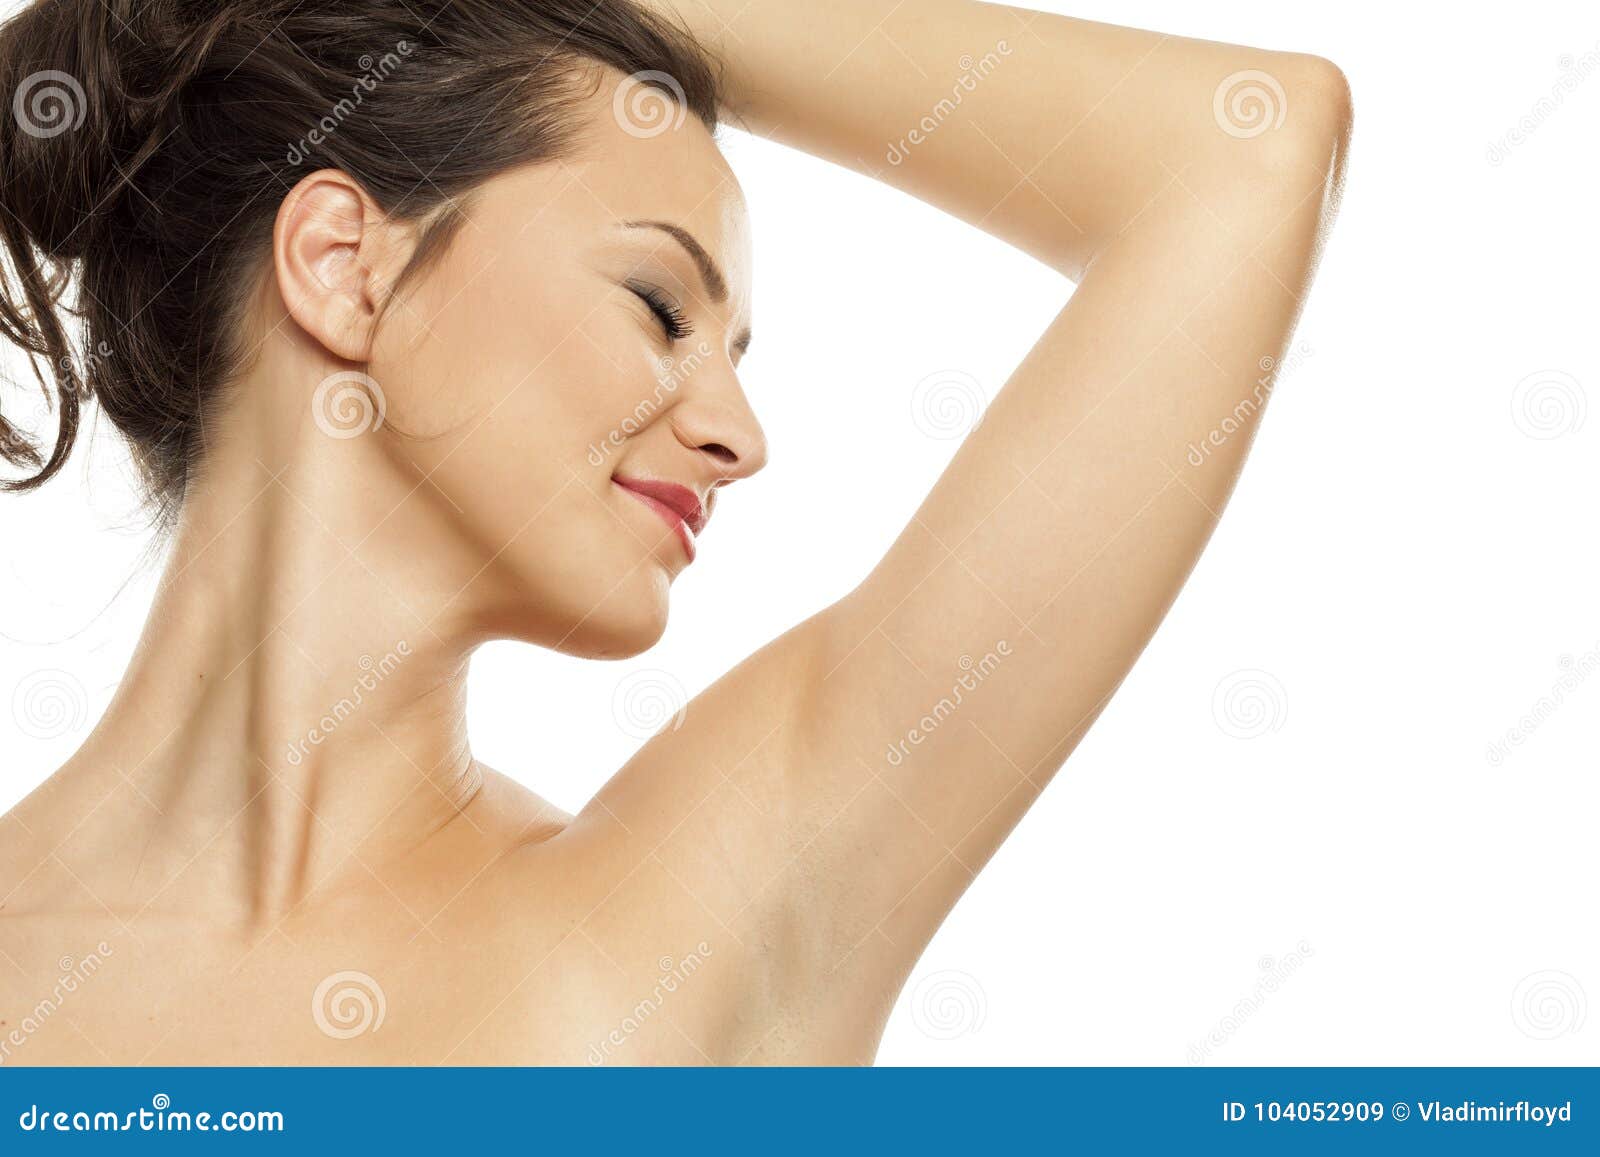 perspiration - fresh armpits